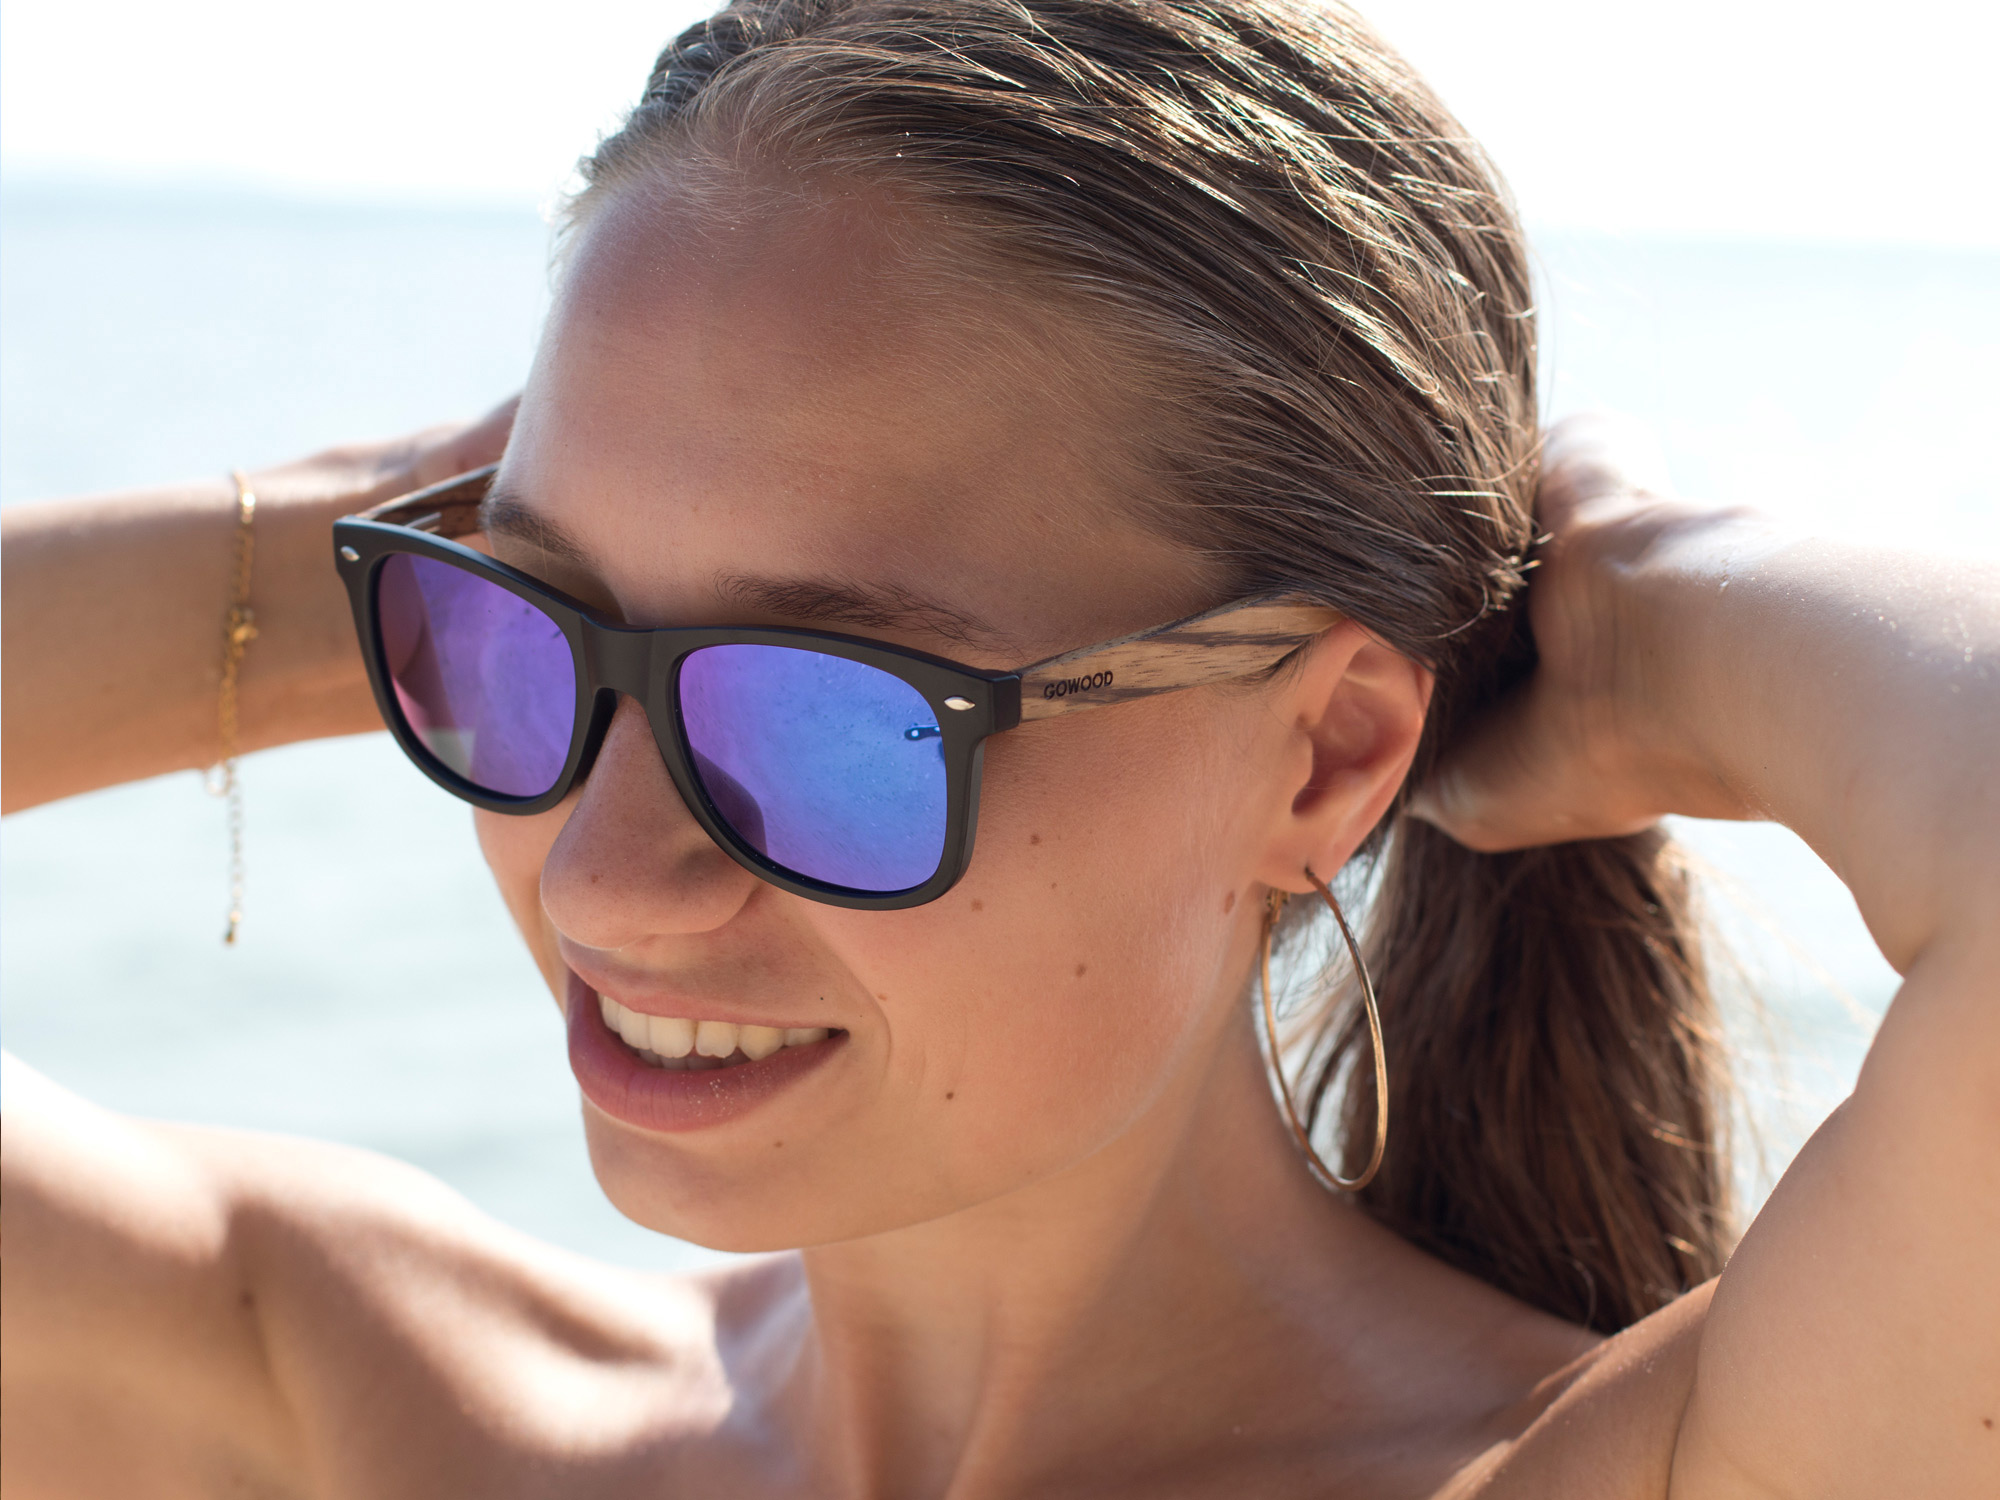 Zebra wood sunglasses with blue mirrored lenses